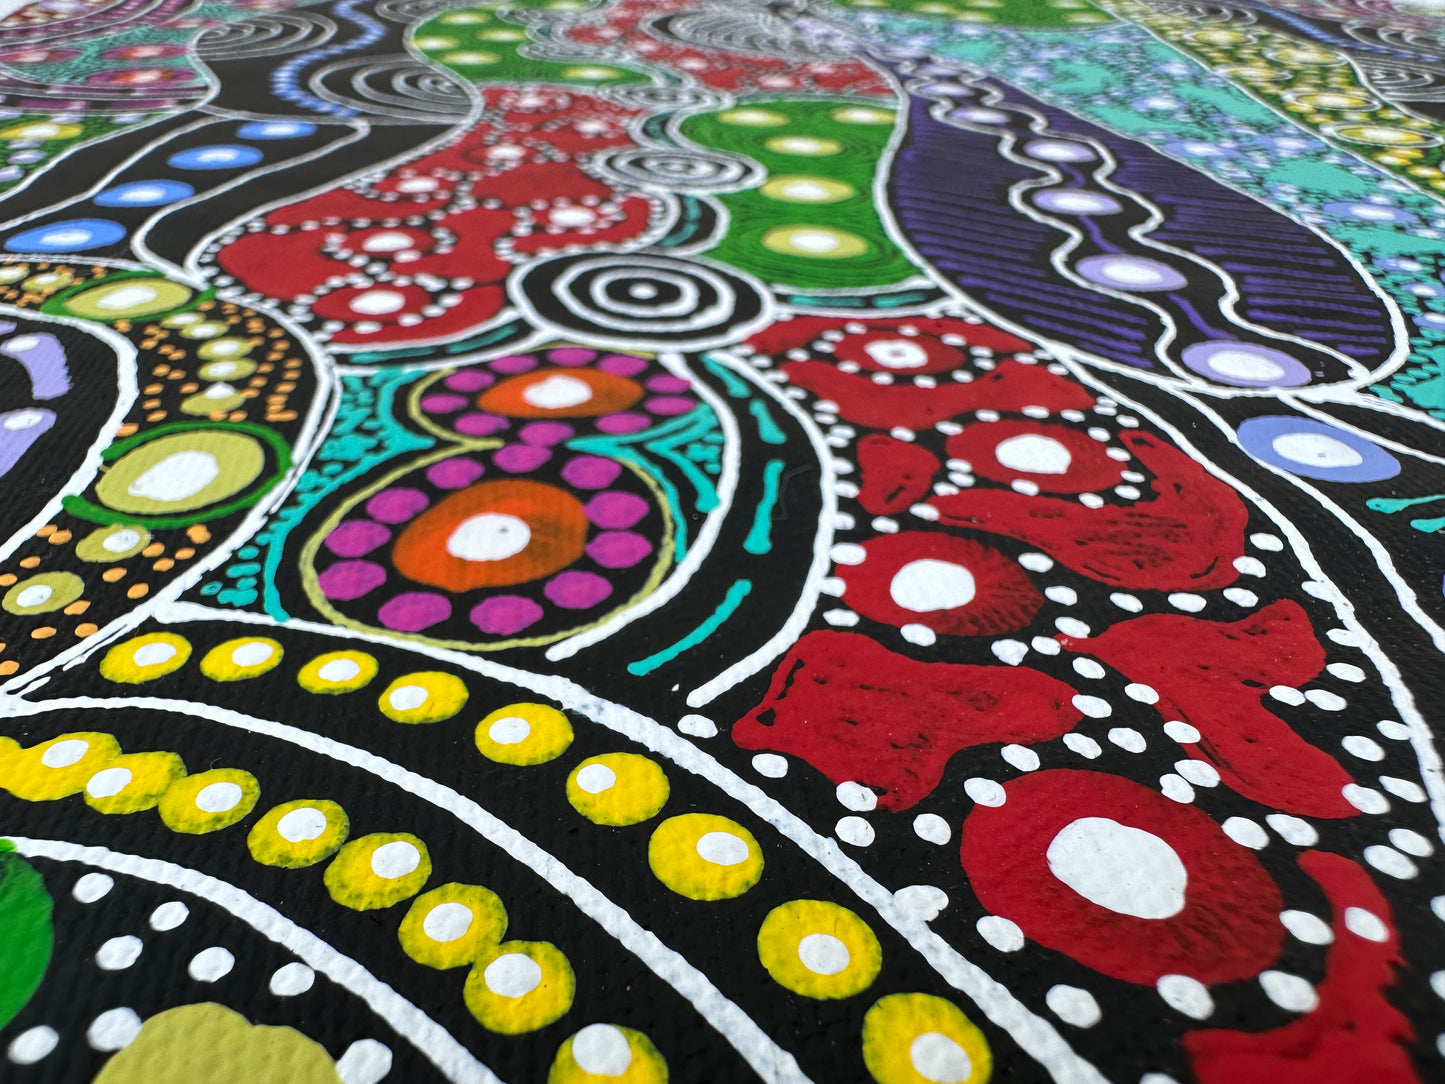 Santa Teresa + Ltyentye Apurte + Dot Art + Painting + Colour + Dreamtime Sisters + Indigenous Art + Aboriginal Art + Australian Art + Painting for Sale + Darwin Based Gallery + Family owned gallery + art for sale + painting for sale